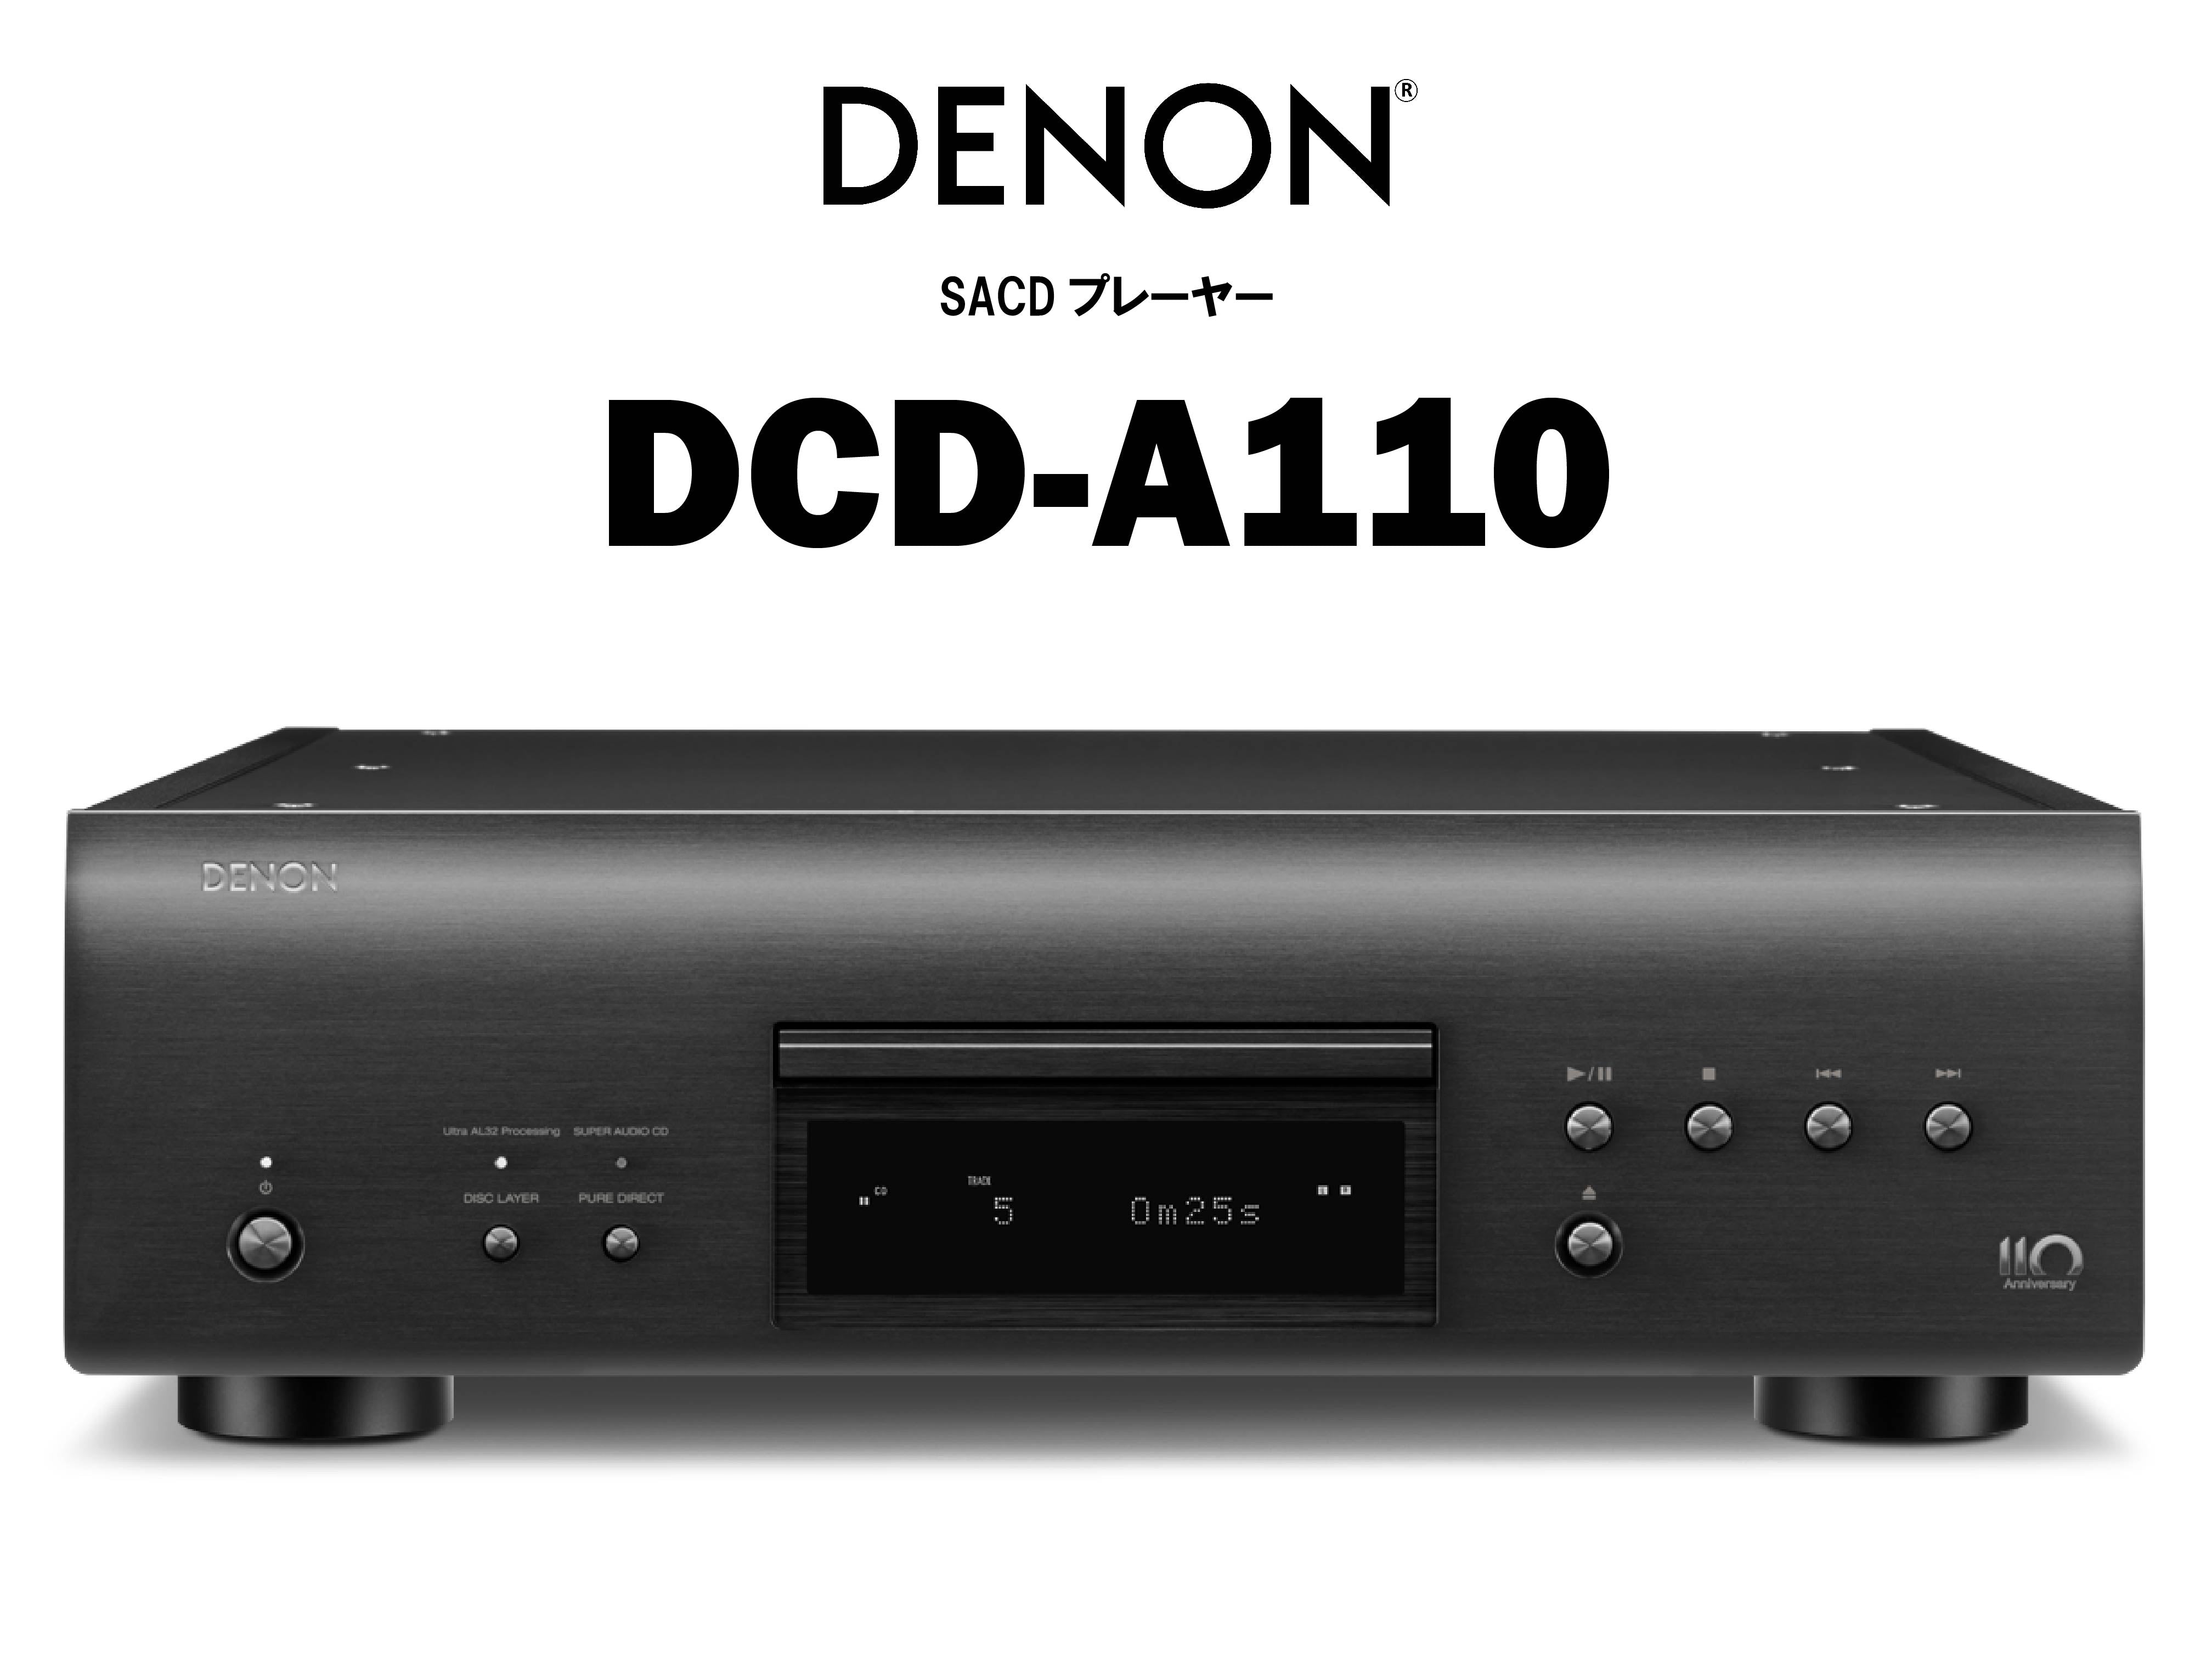 DENON DCD-A110 SACDプレーヤー – CORE オーディオコア